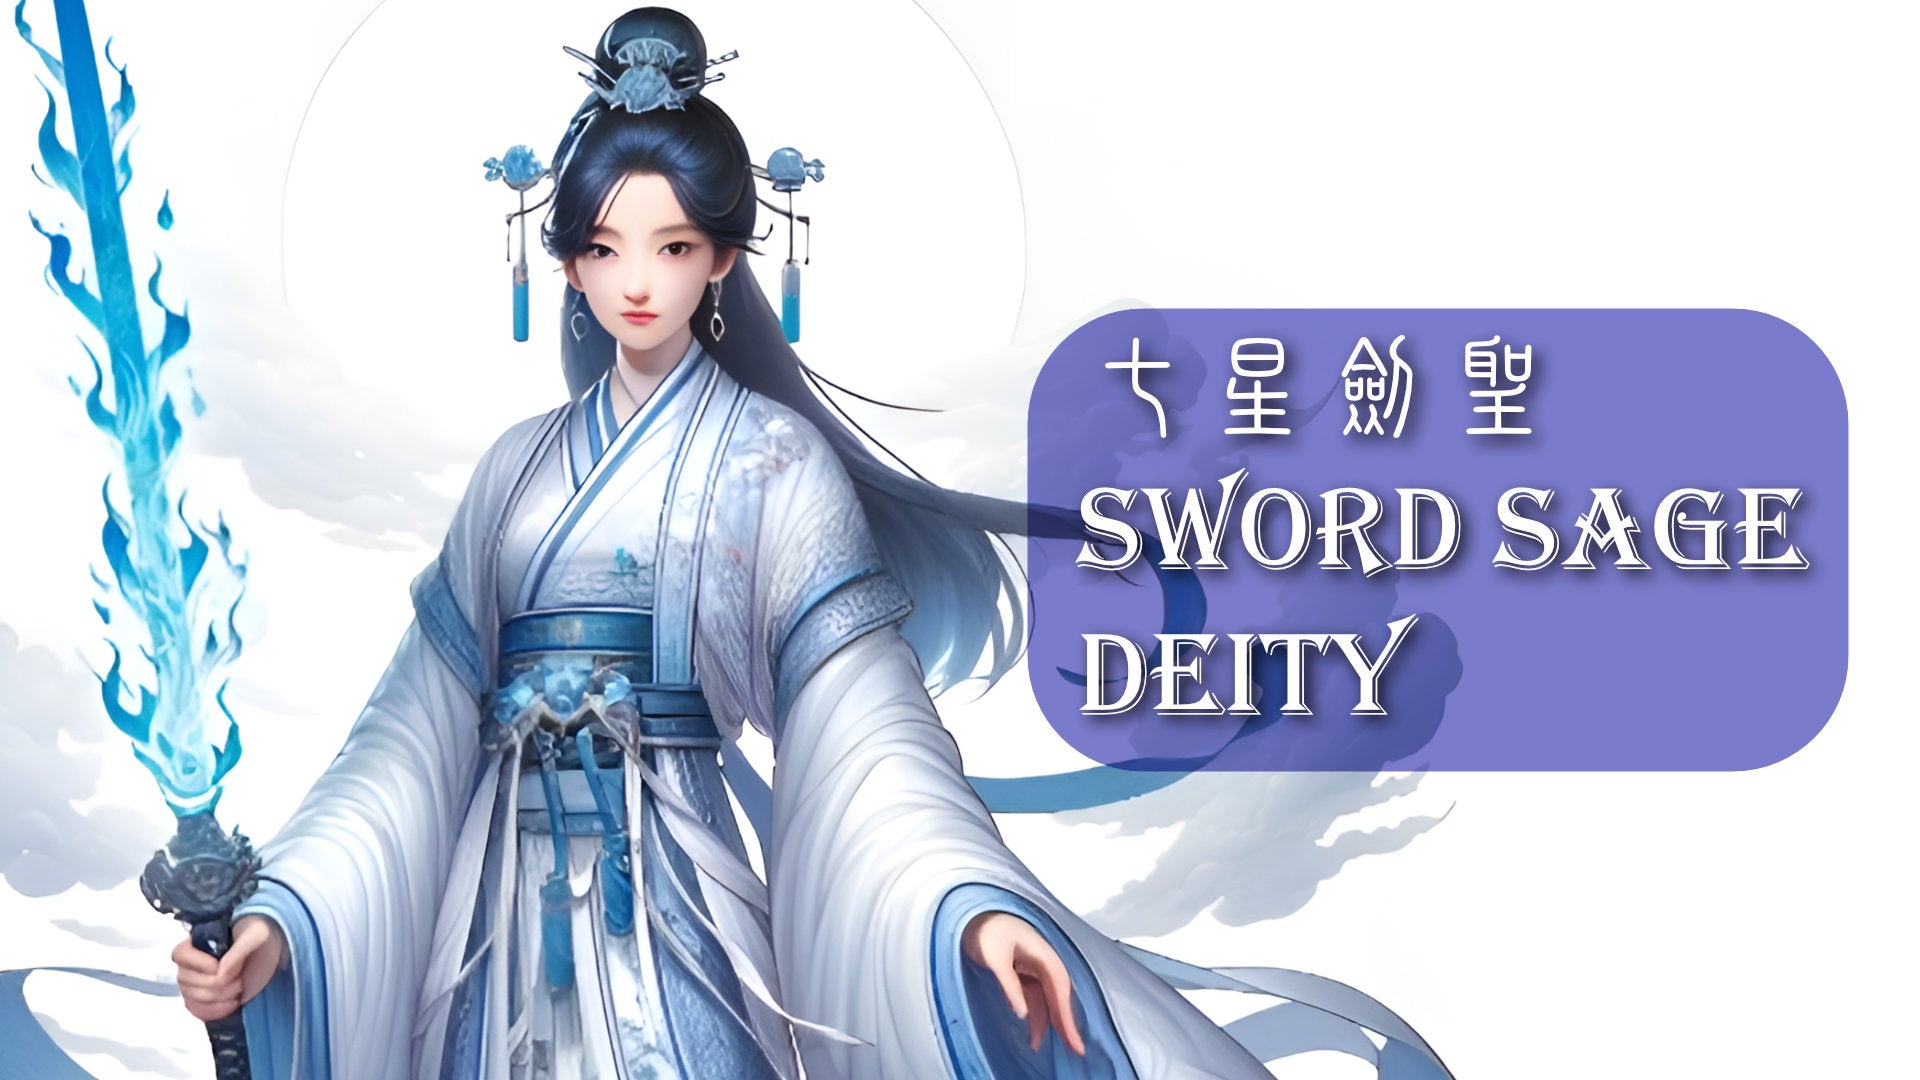 
                  Seven Star Sword Sage Deity 七星劍聖
                